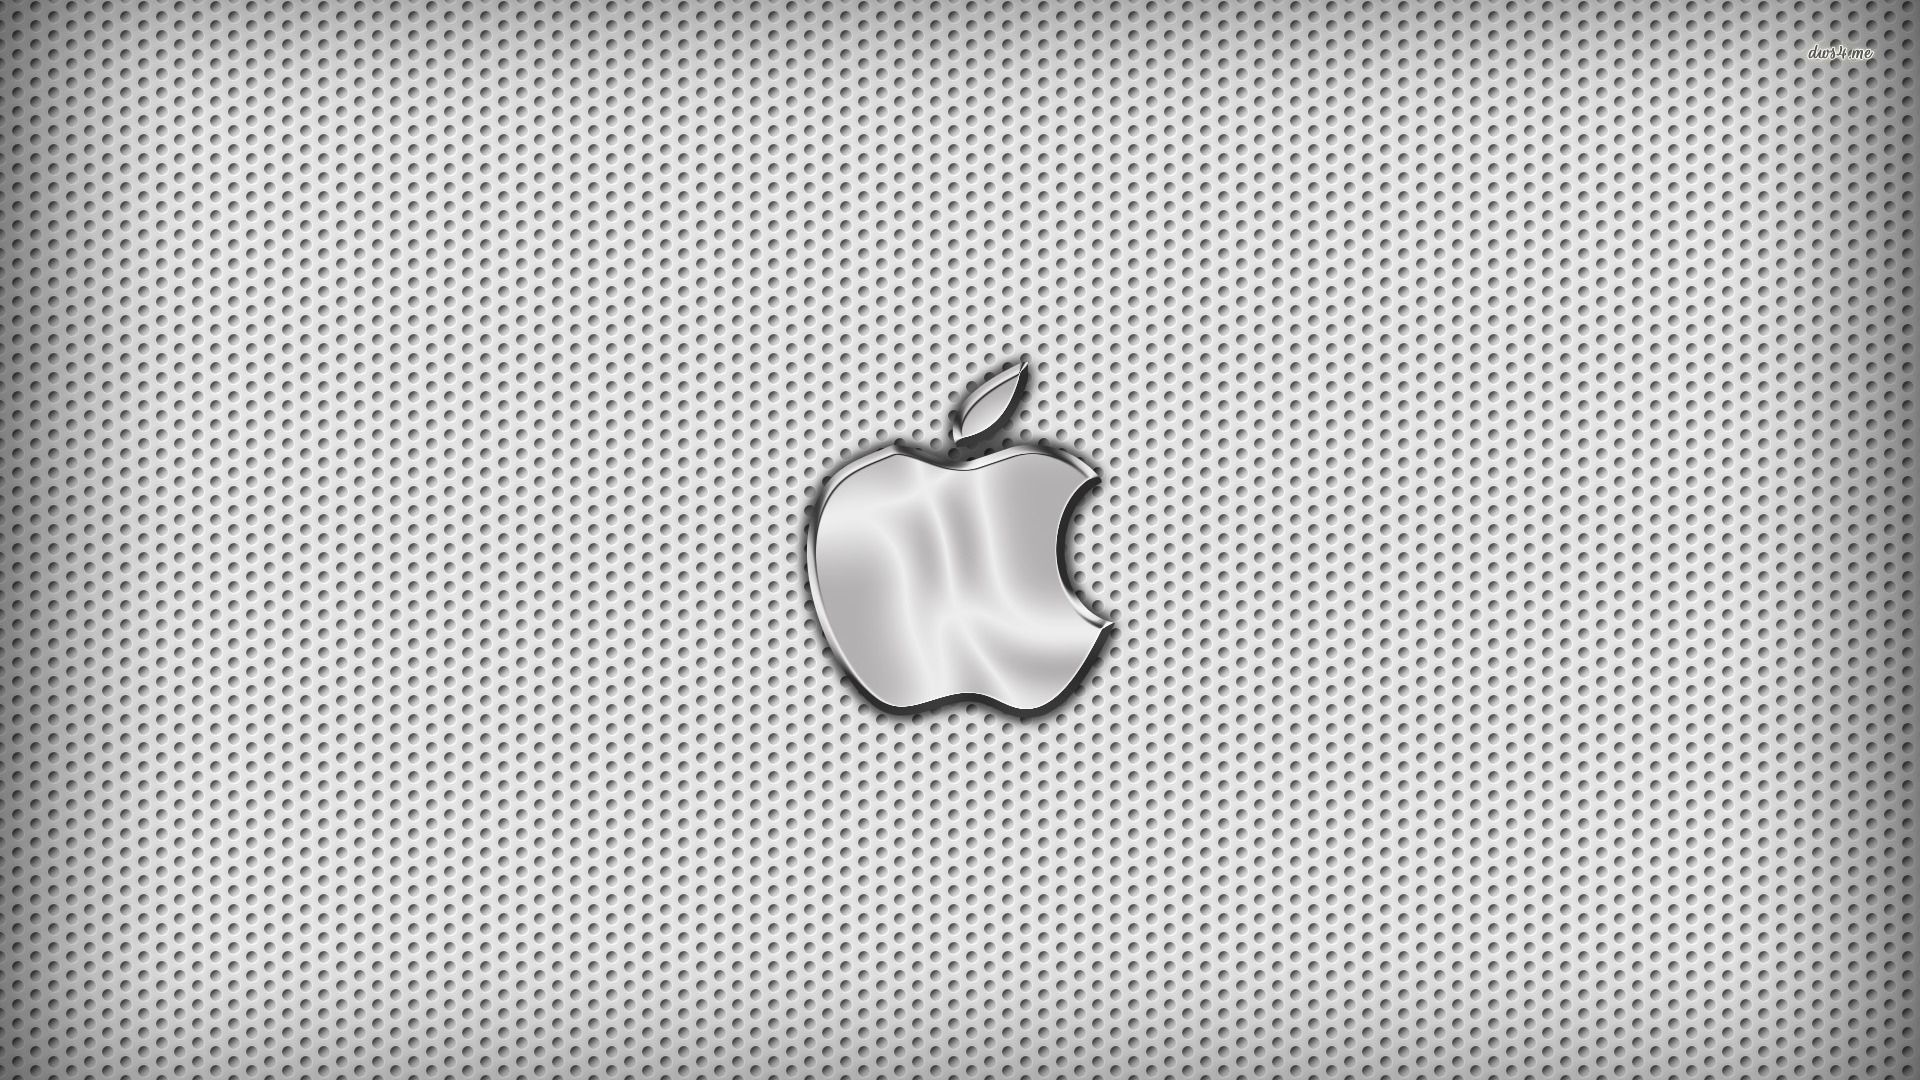 Download 21 black-apple-logo-wallpaper Apple-Logo-Black-Backgrounds-Wallpaper-Cave.jpg